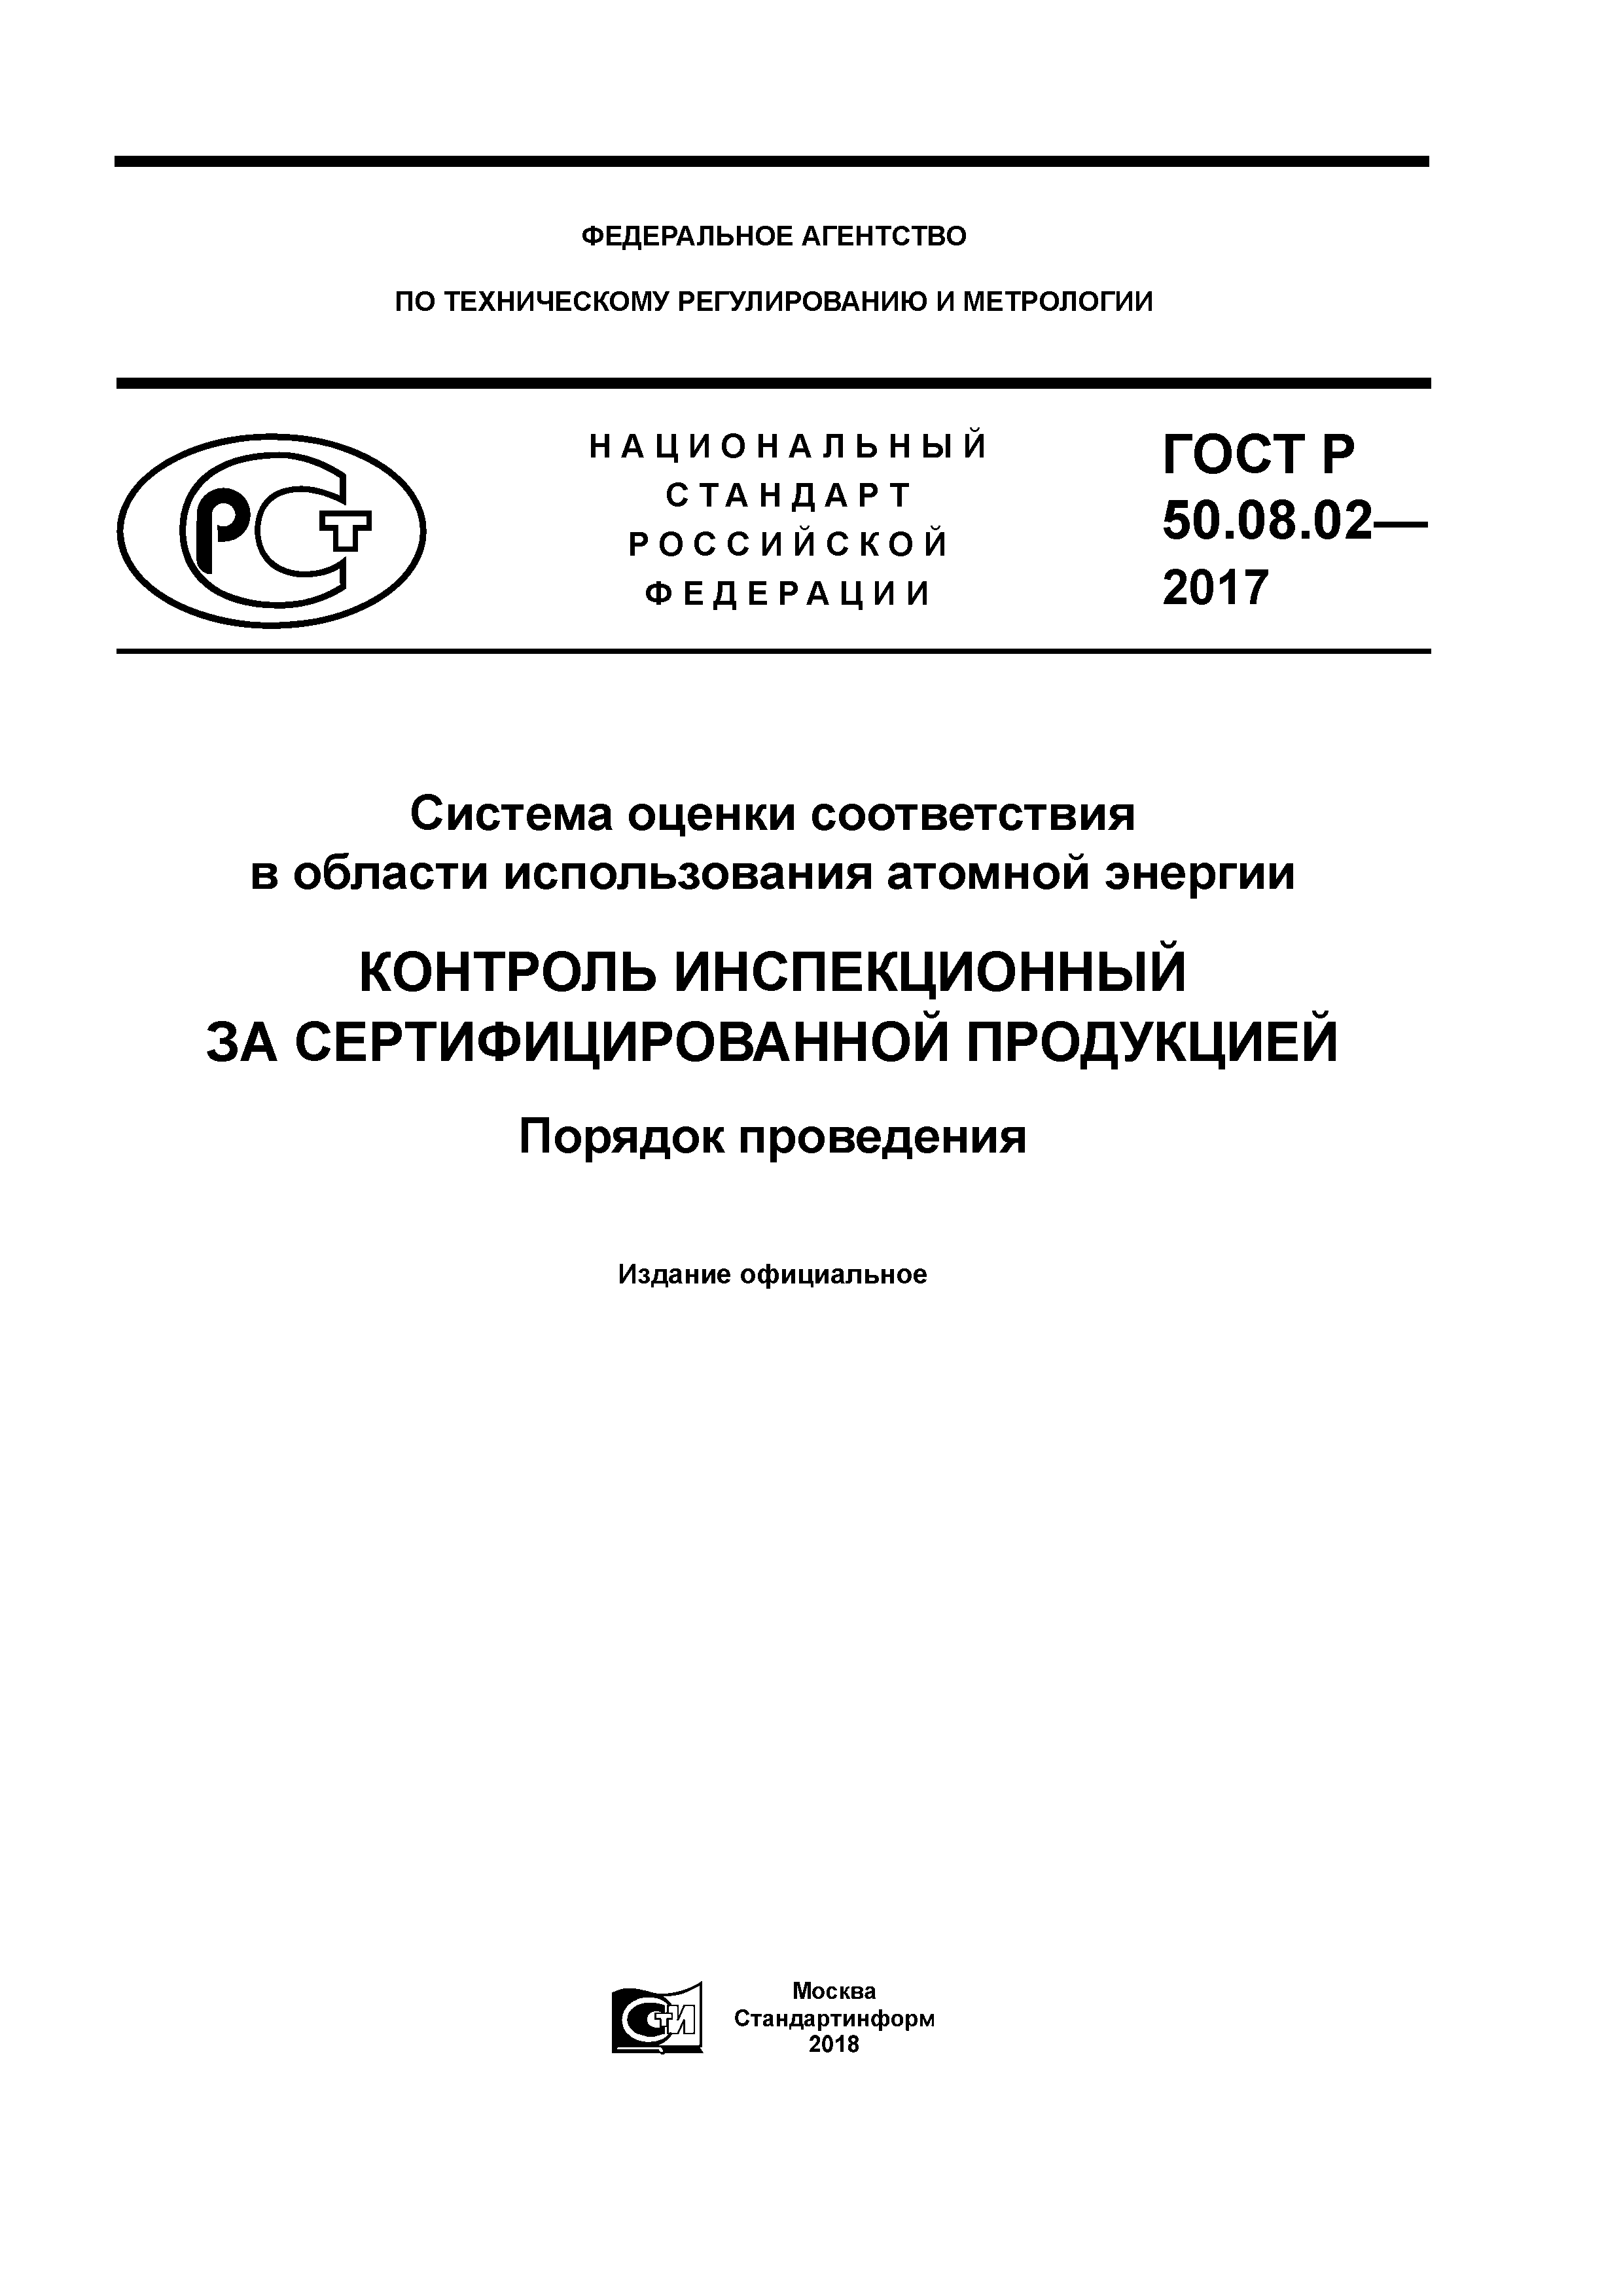 ГОСТ Р 50.08.02-2017